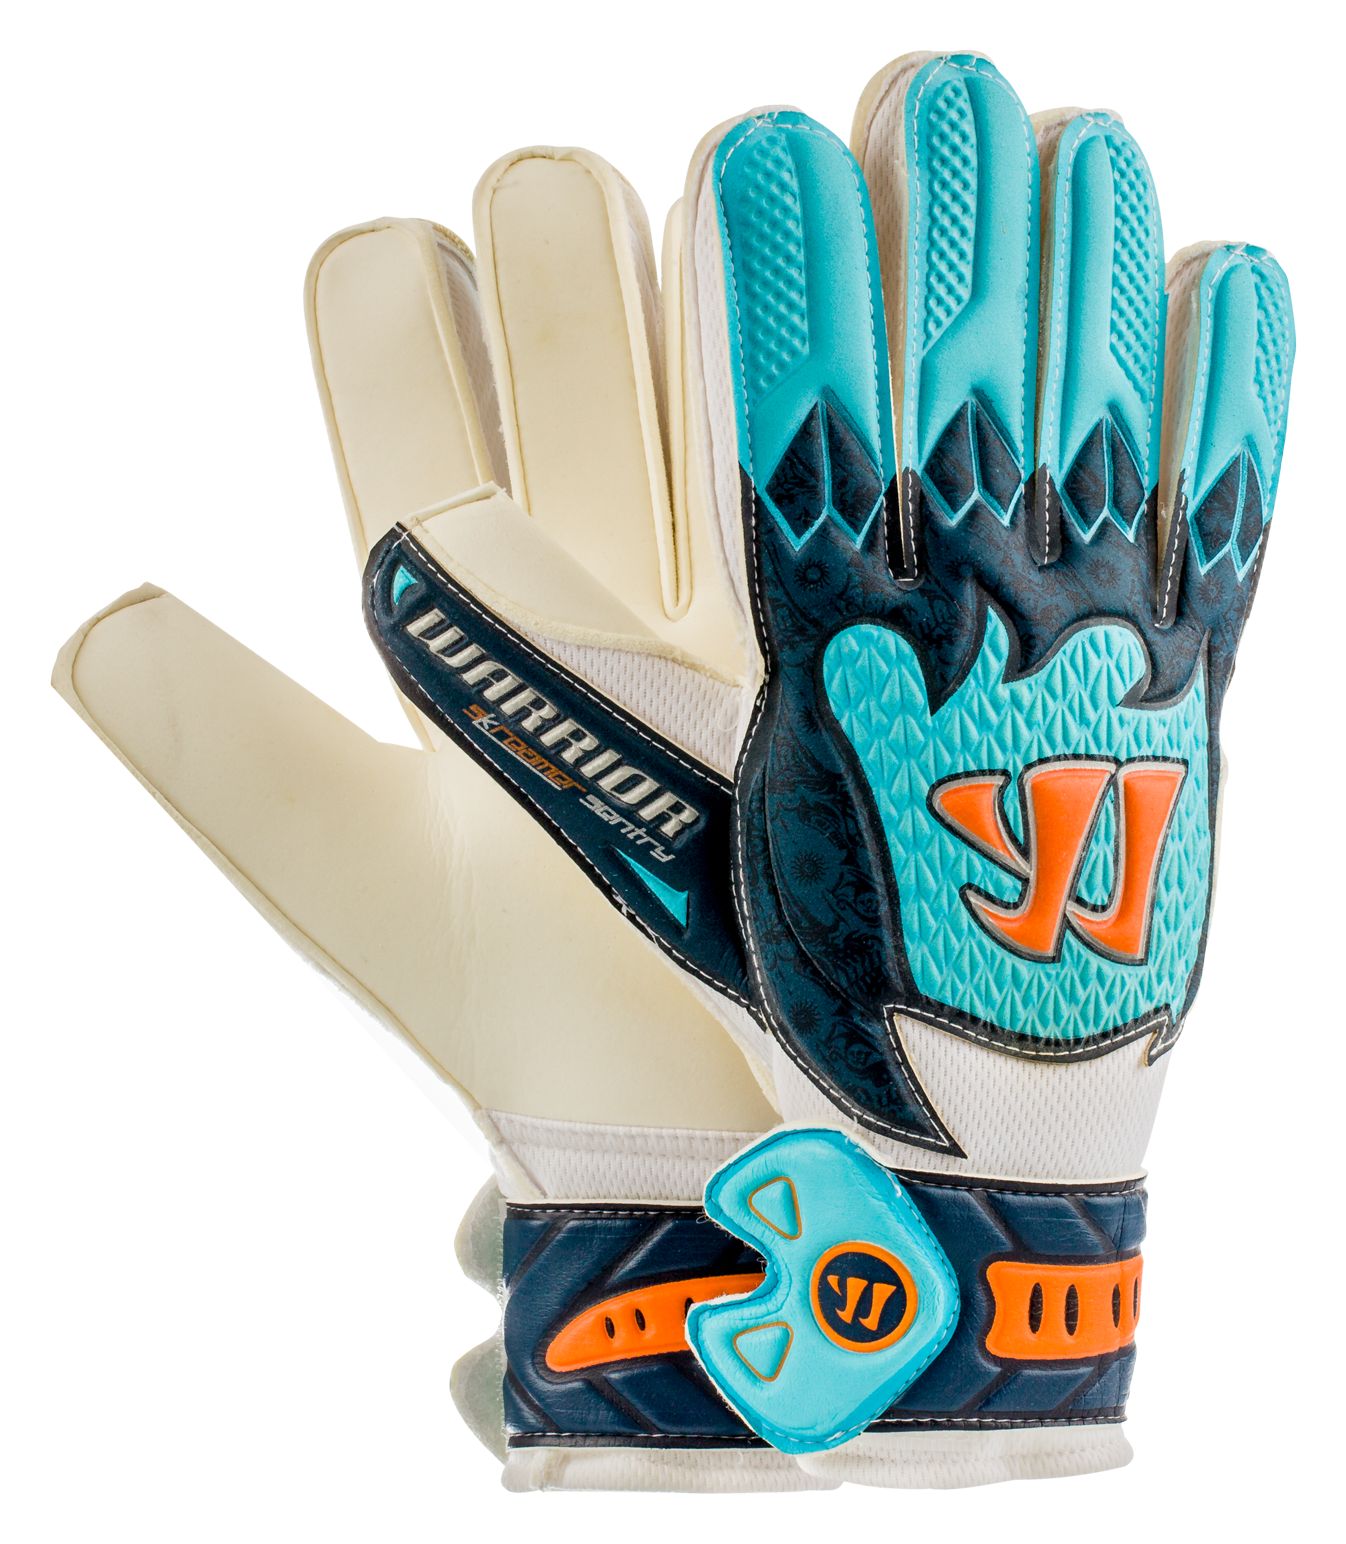 Skreamer Sentry Goalkeeper Gloves, White with Blue Radiance & Insignia Blue image number 1